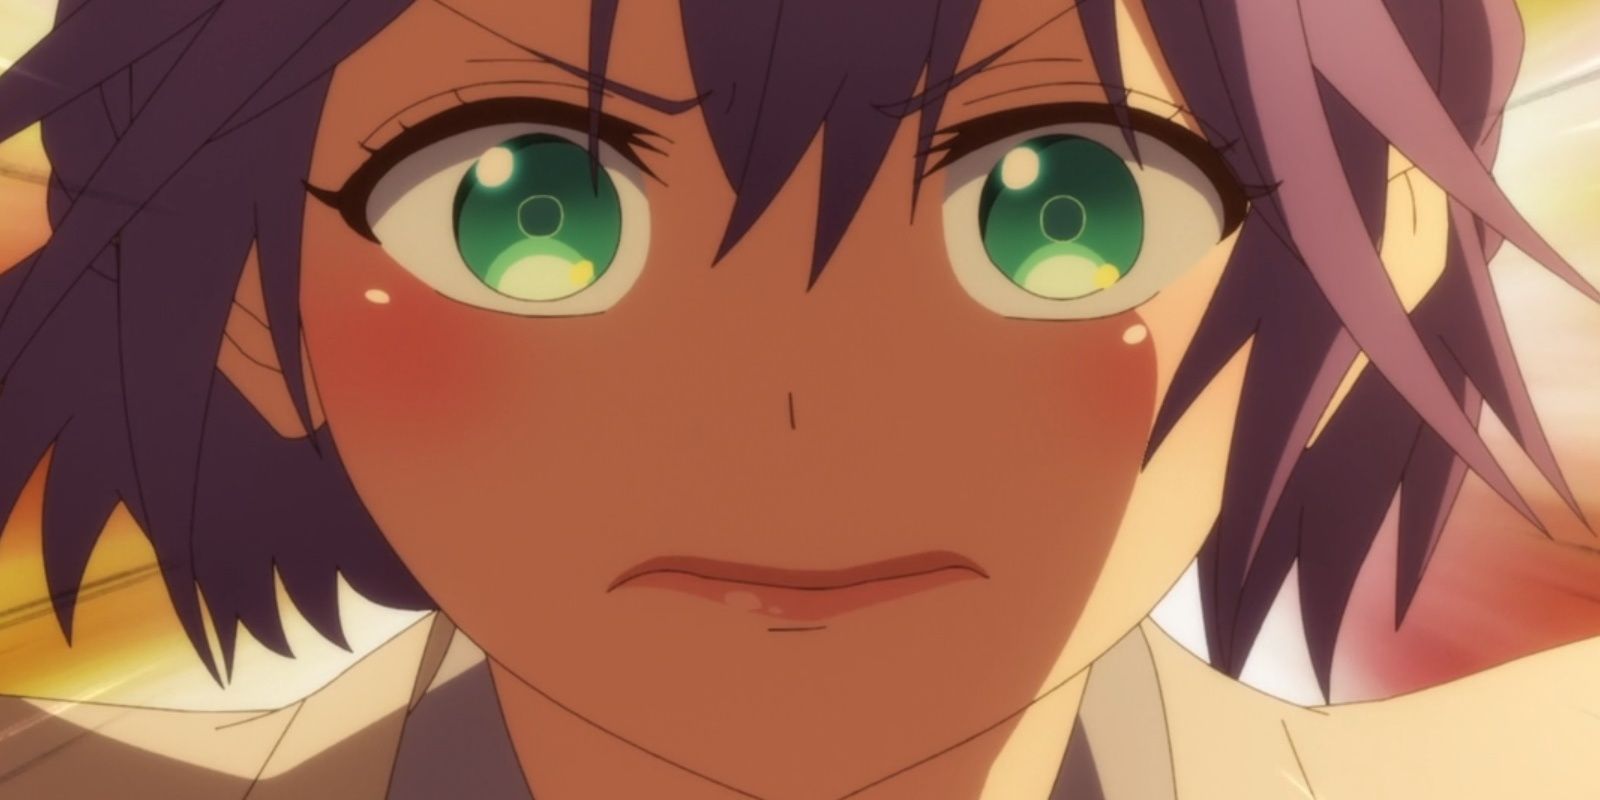 Hiro intense face